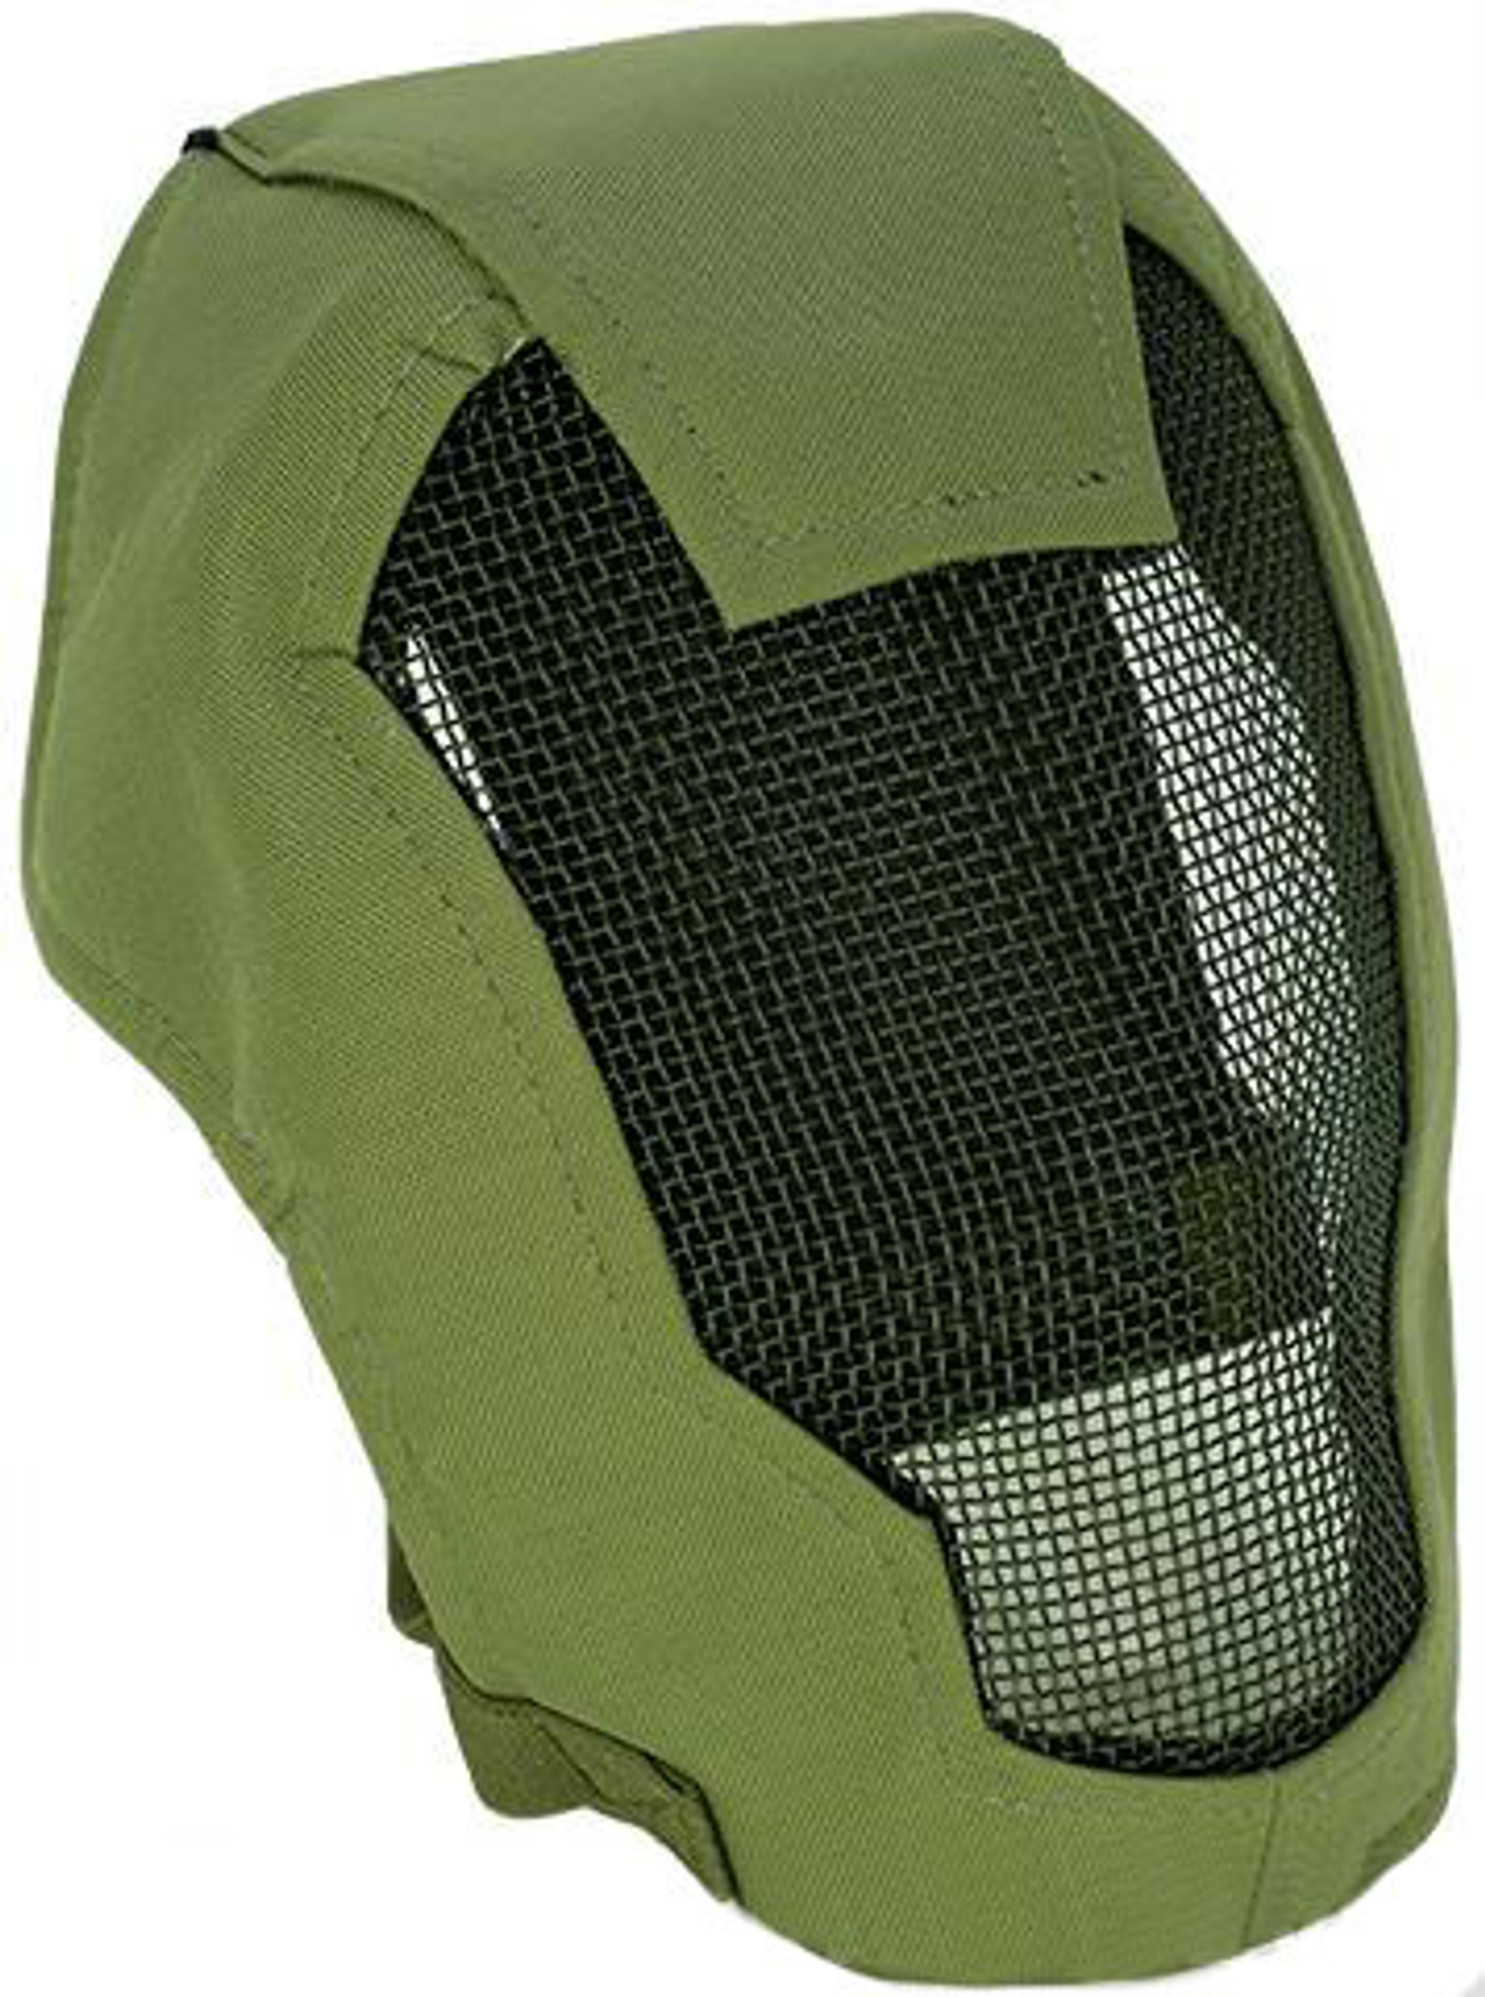 Matrix Iron Face Carbon Steel "Striker" Gen4 Metal Mesh Full Face Mask - OD Green